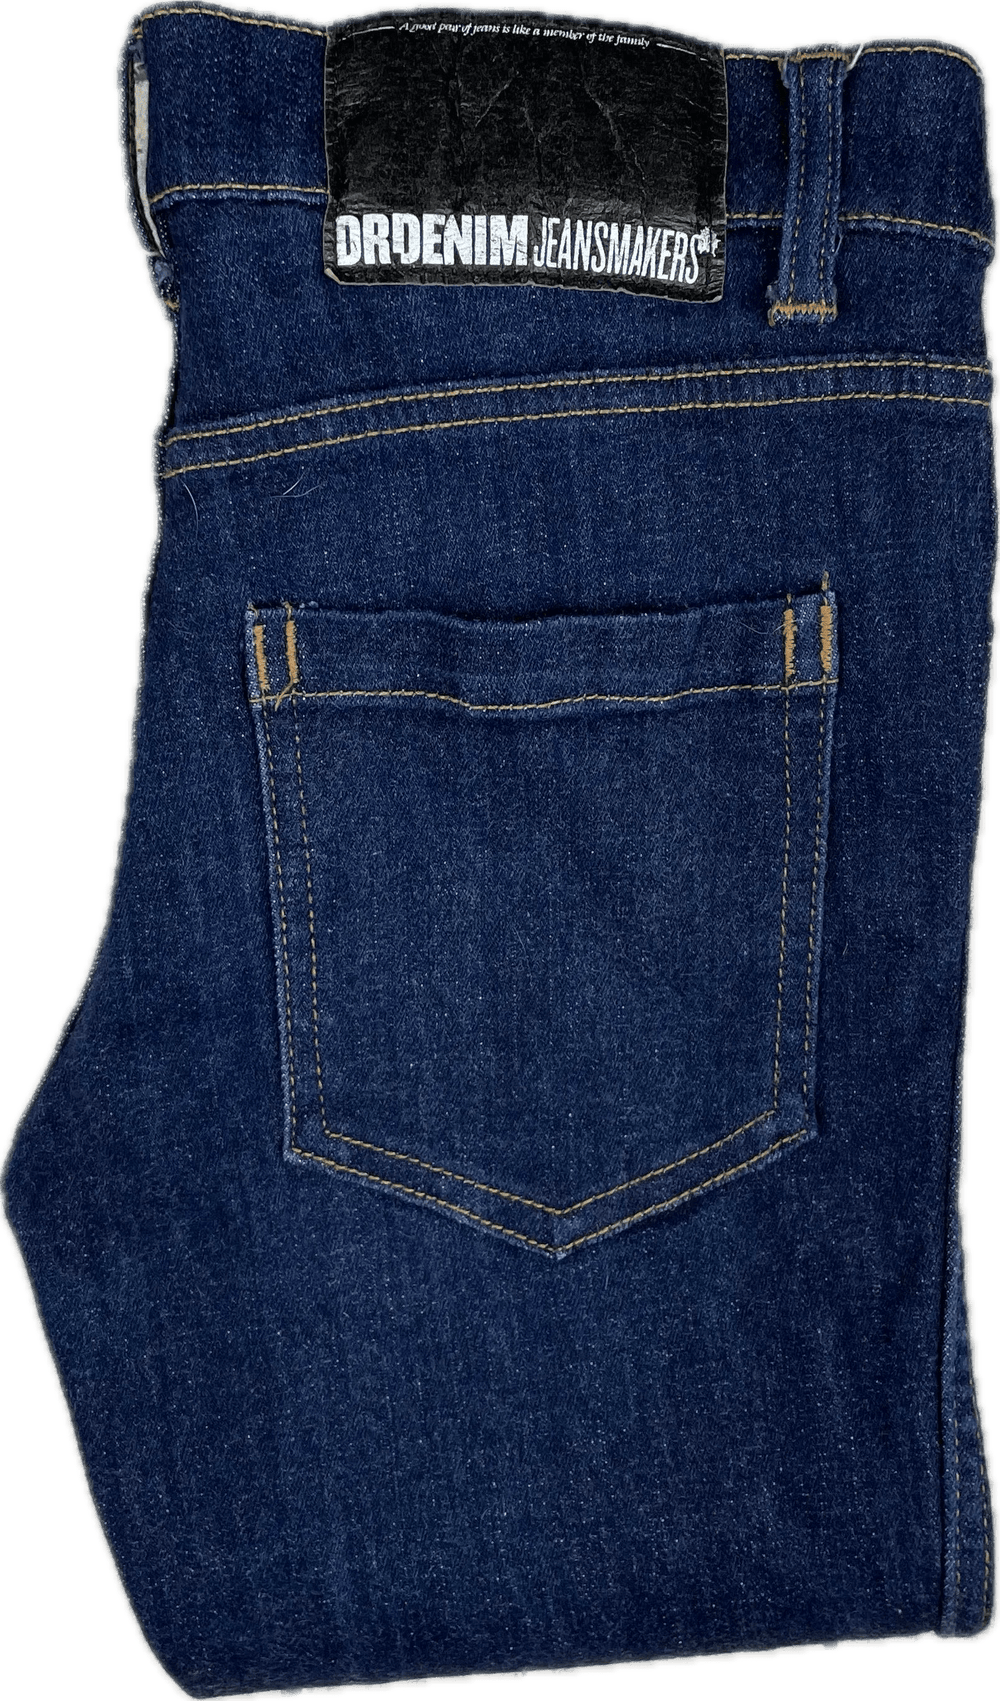 Dr Denim 'Snap' Stretch Super Skinny Jeans - Size 28/32 - Jean Pool